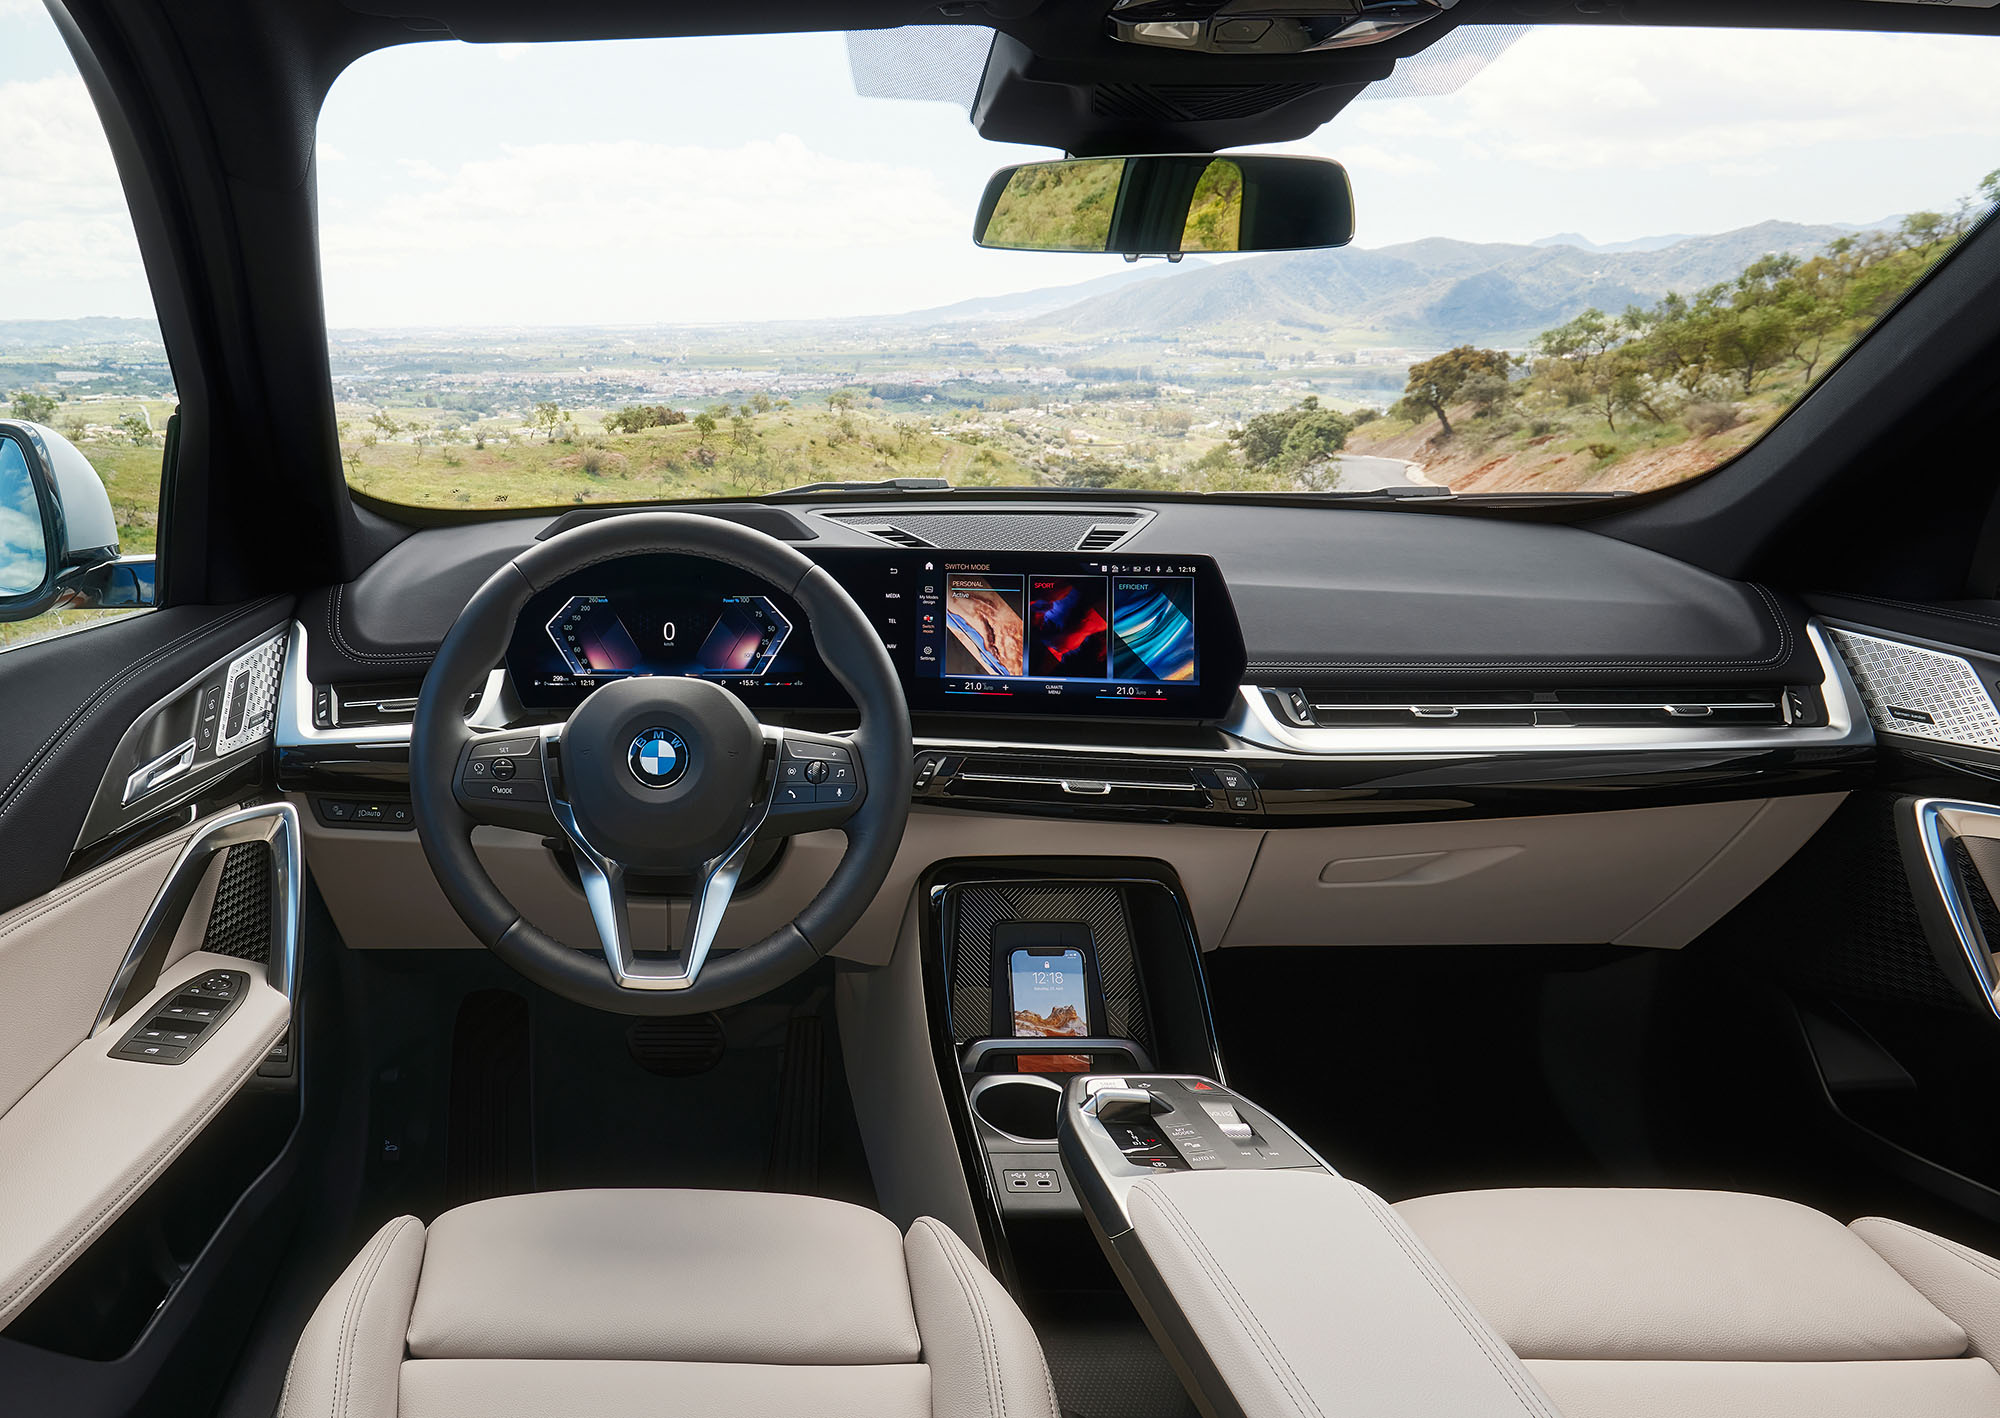 2023 BMW X1 interior in white